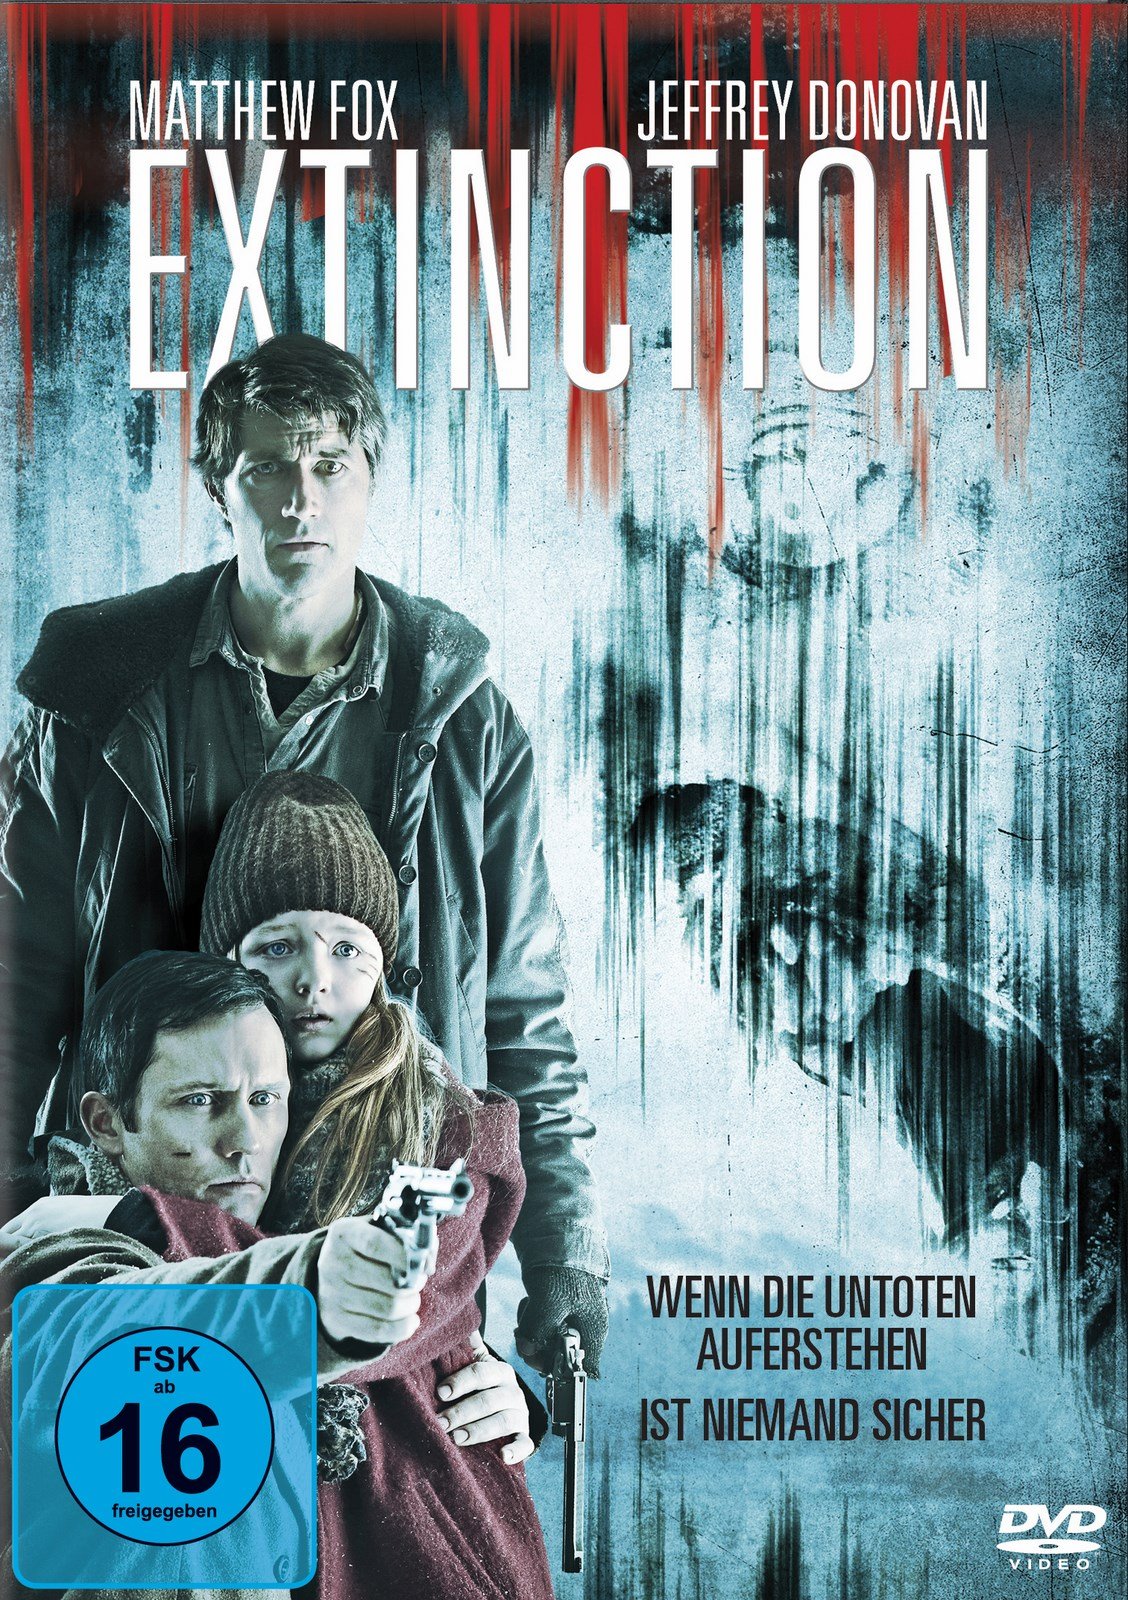 rate movie extinction 2015